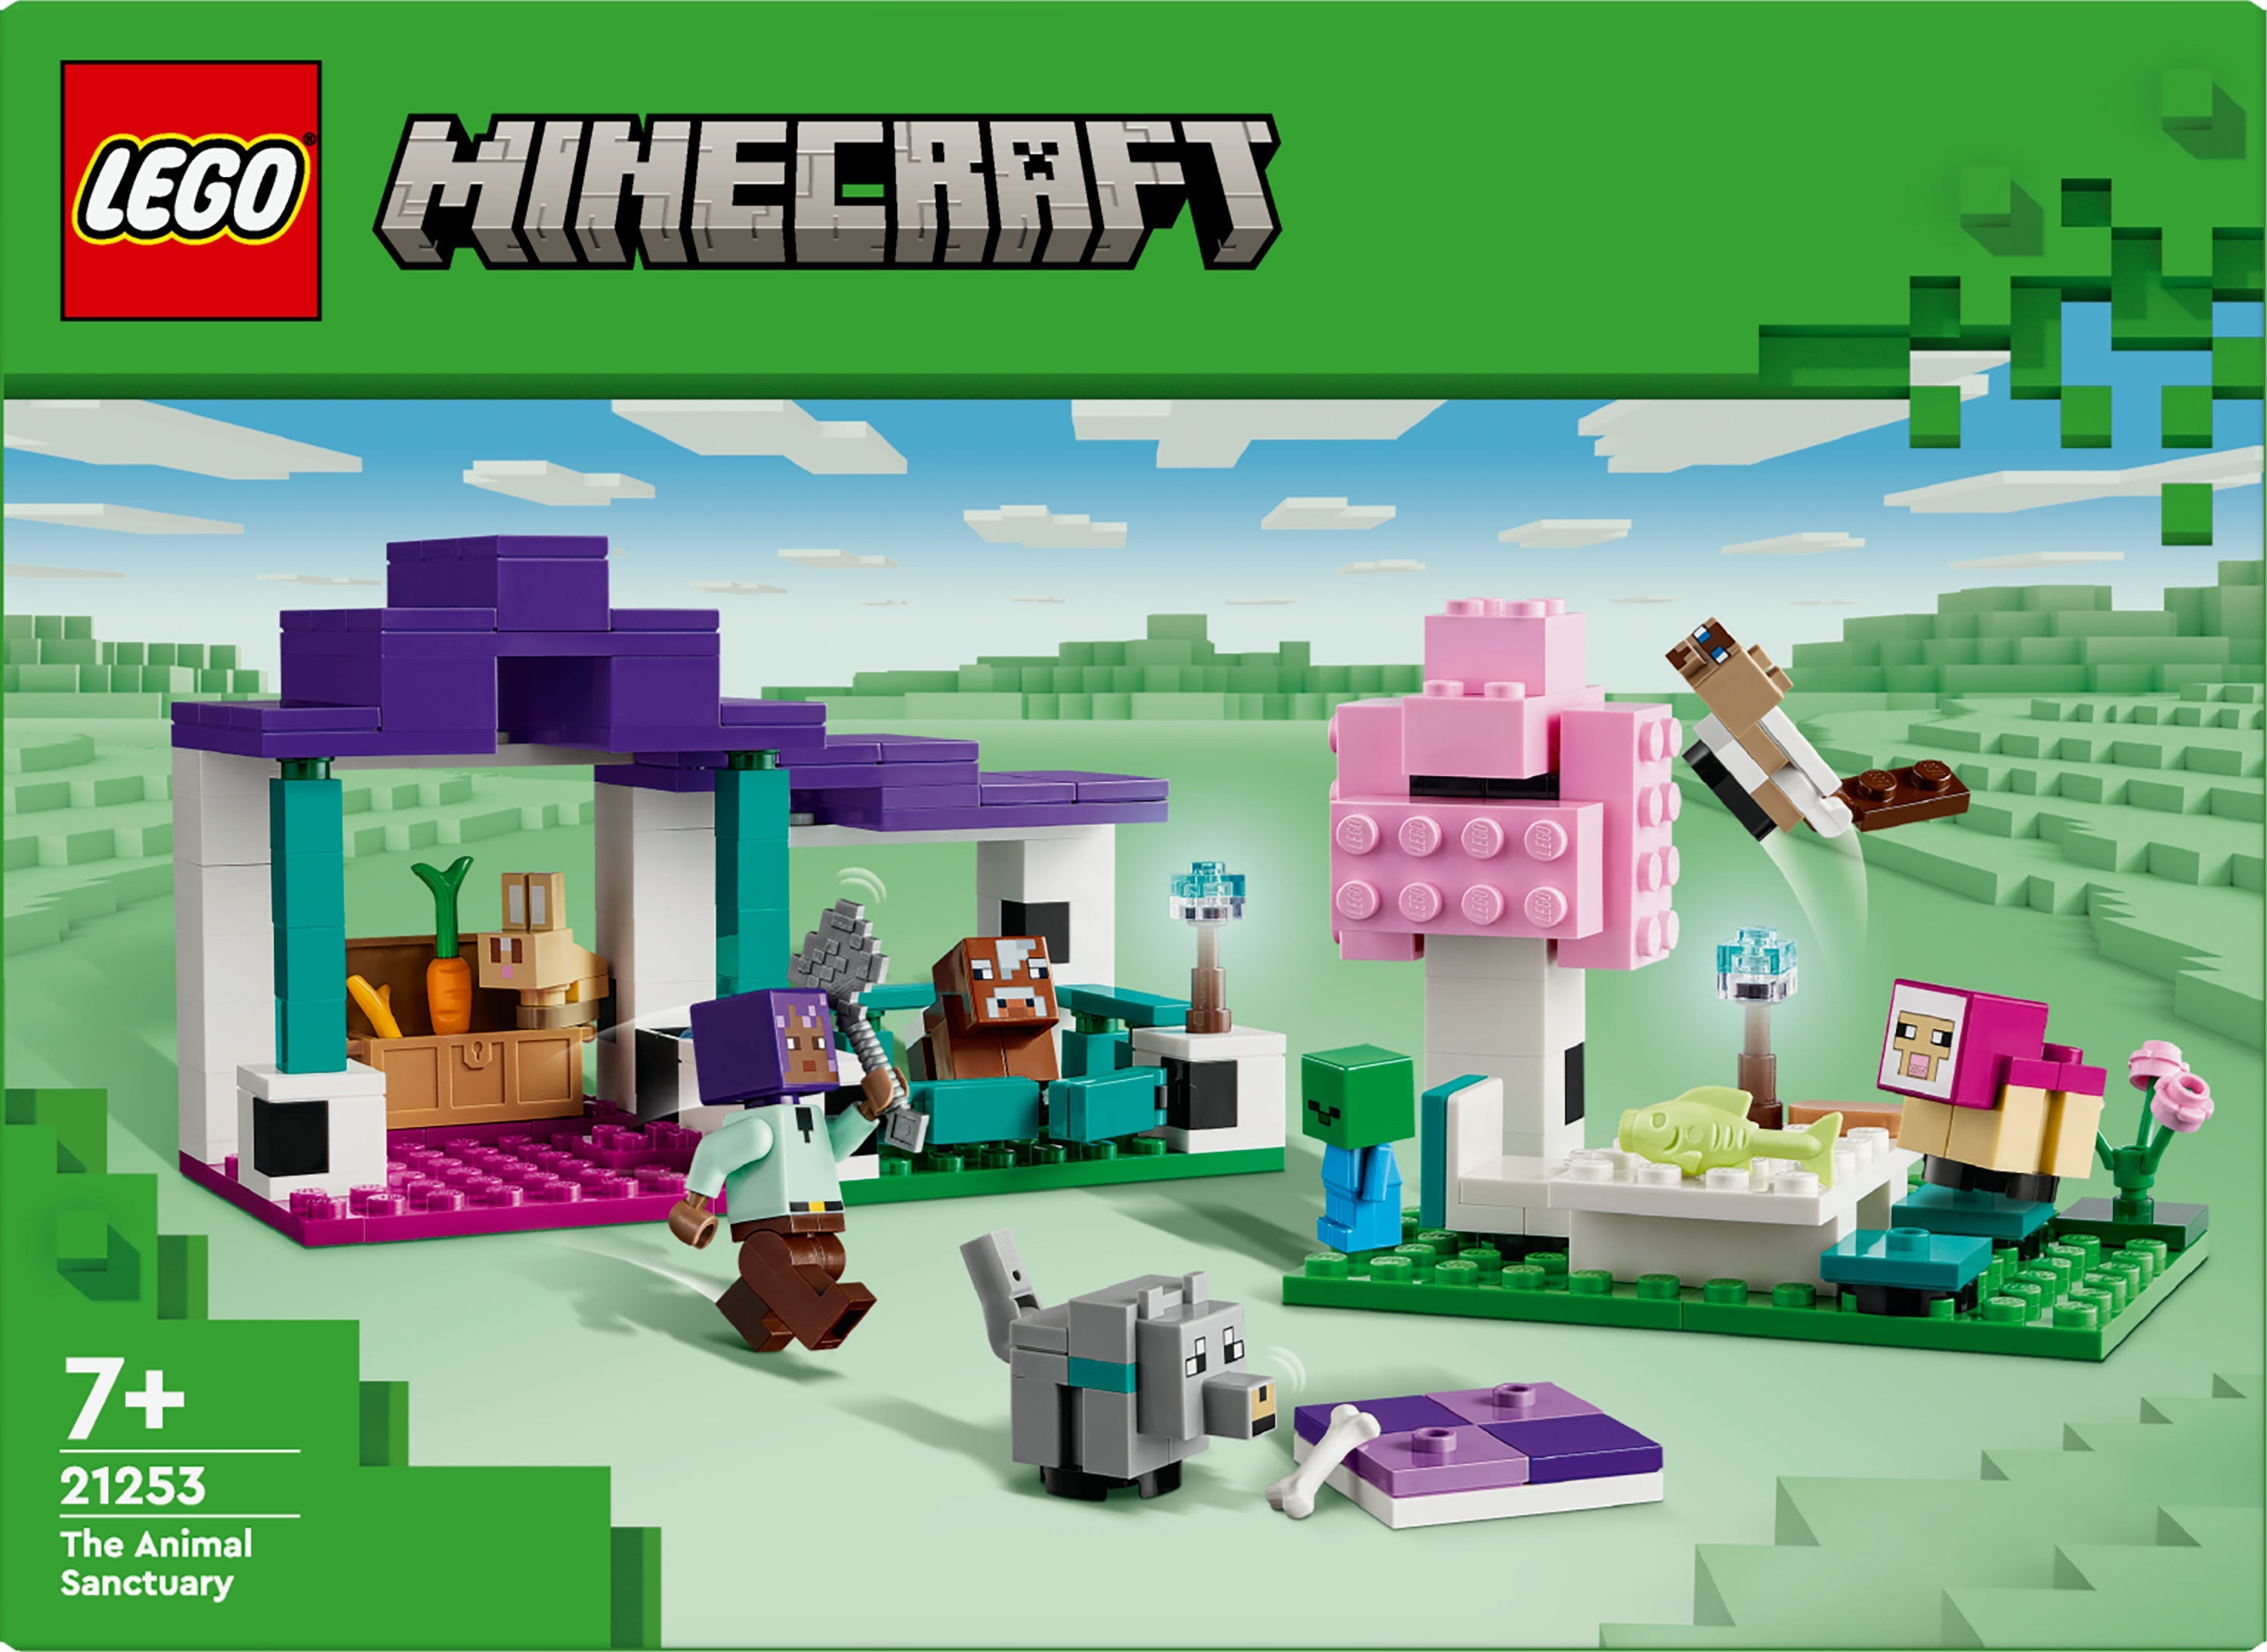 LEGO Minecraft - The Animal Sanctuary